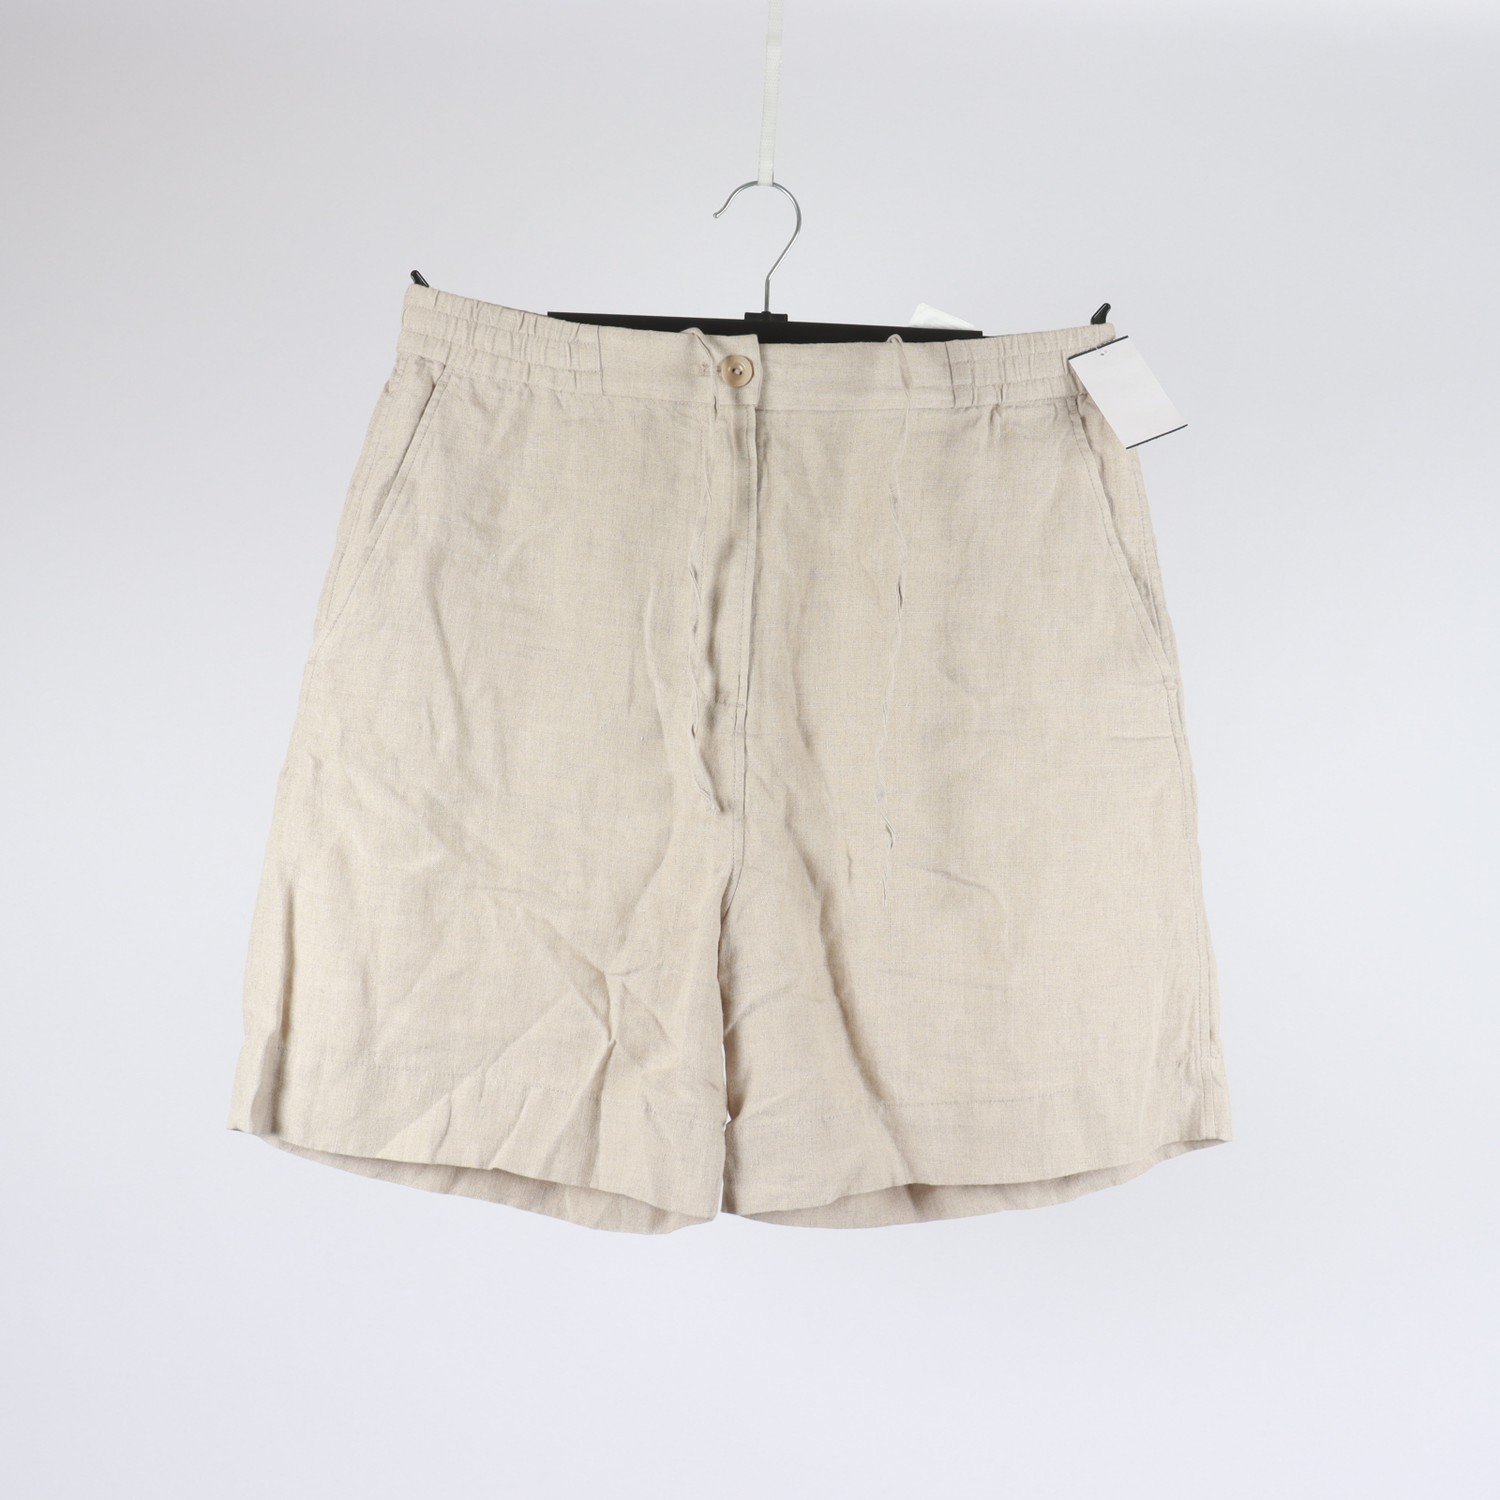 Shorts, COS, beige, 100 % linne, stl. M